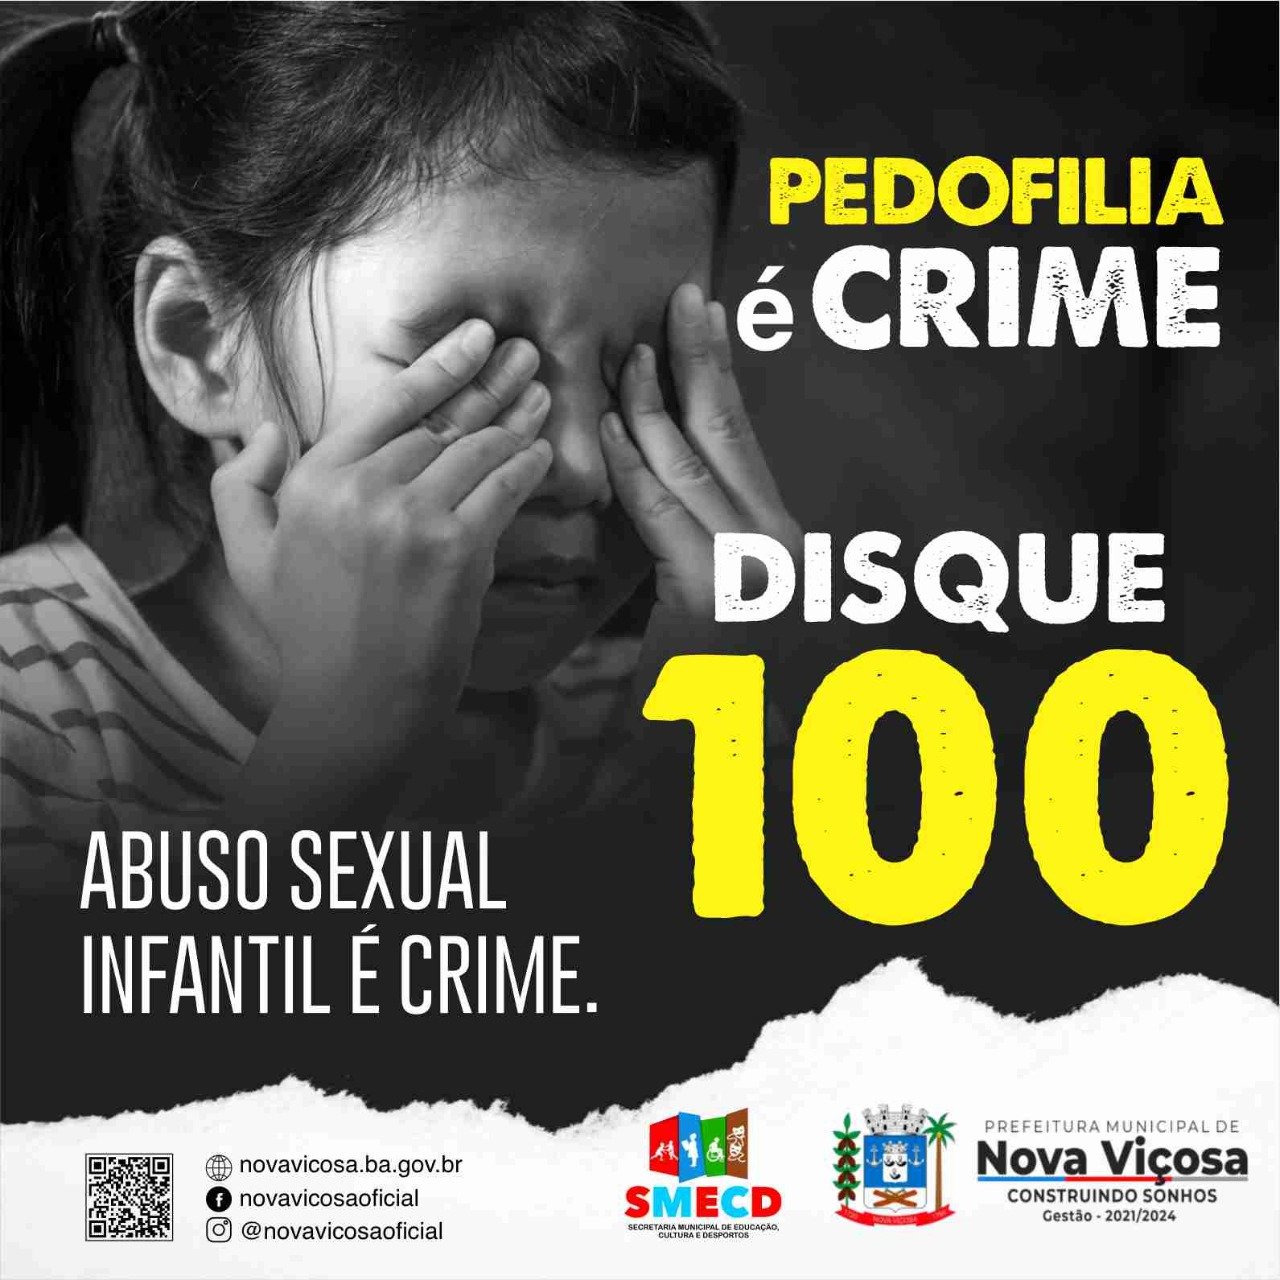 You are currently viewing Campanha Educacional Contra Pedofilía – Nova Viçosa-BA